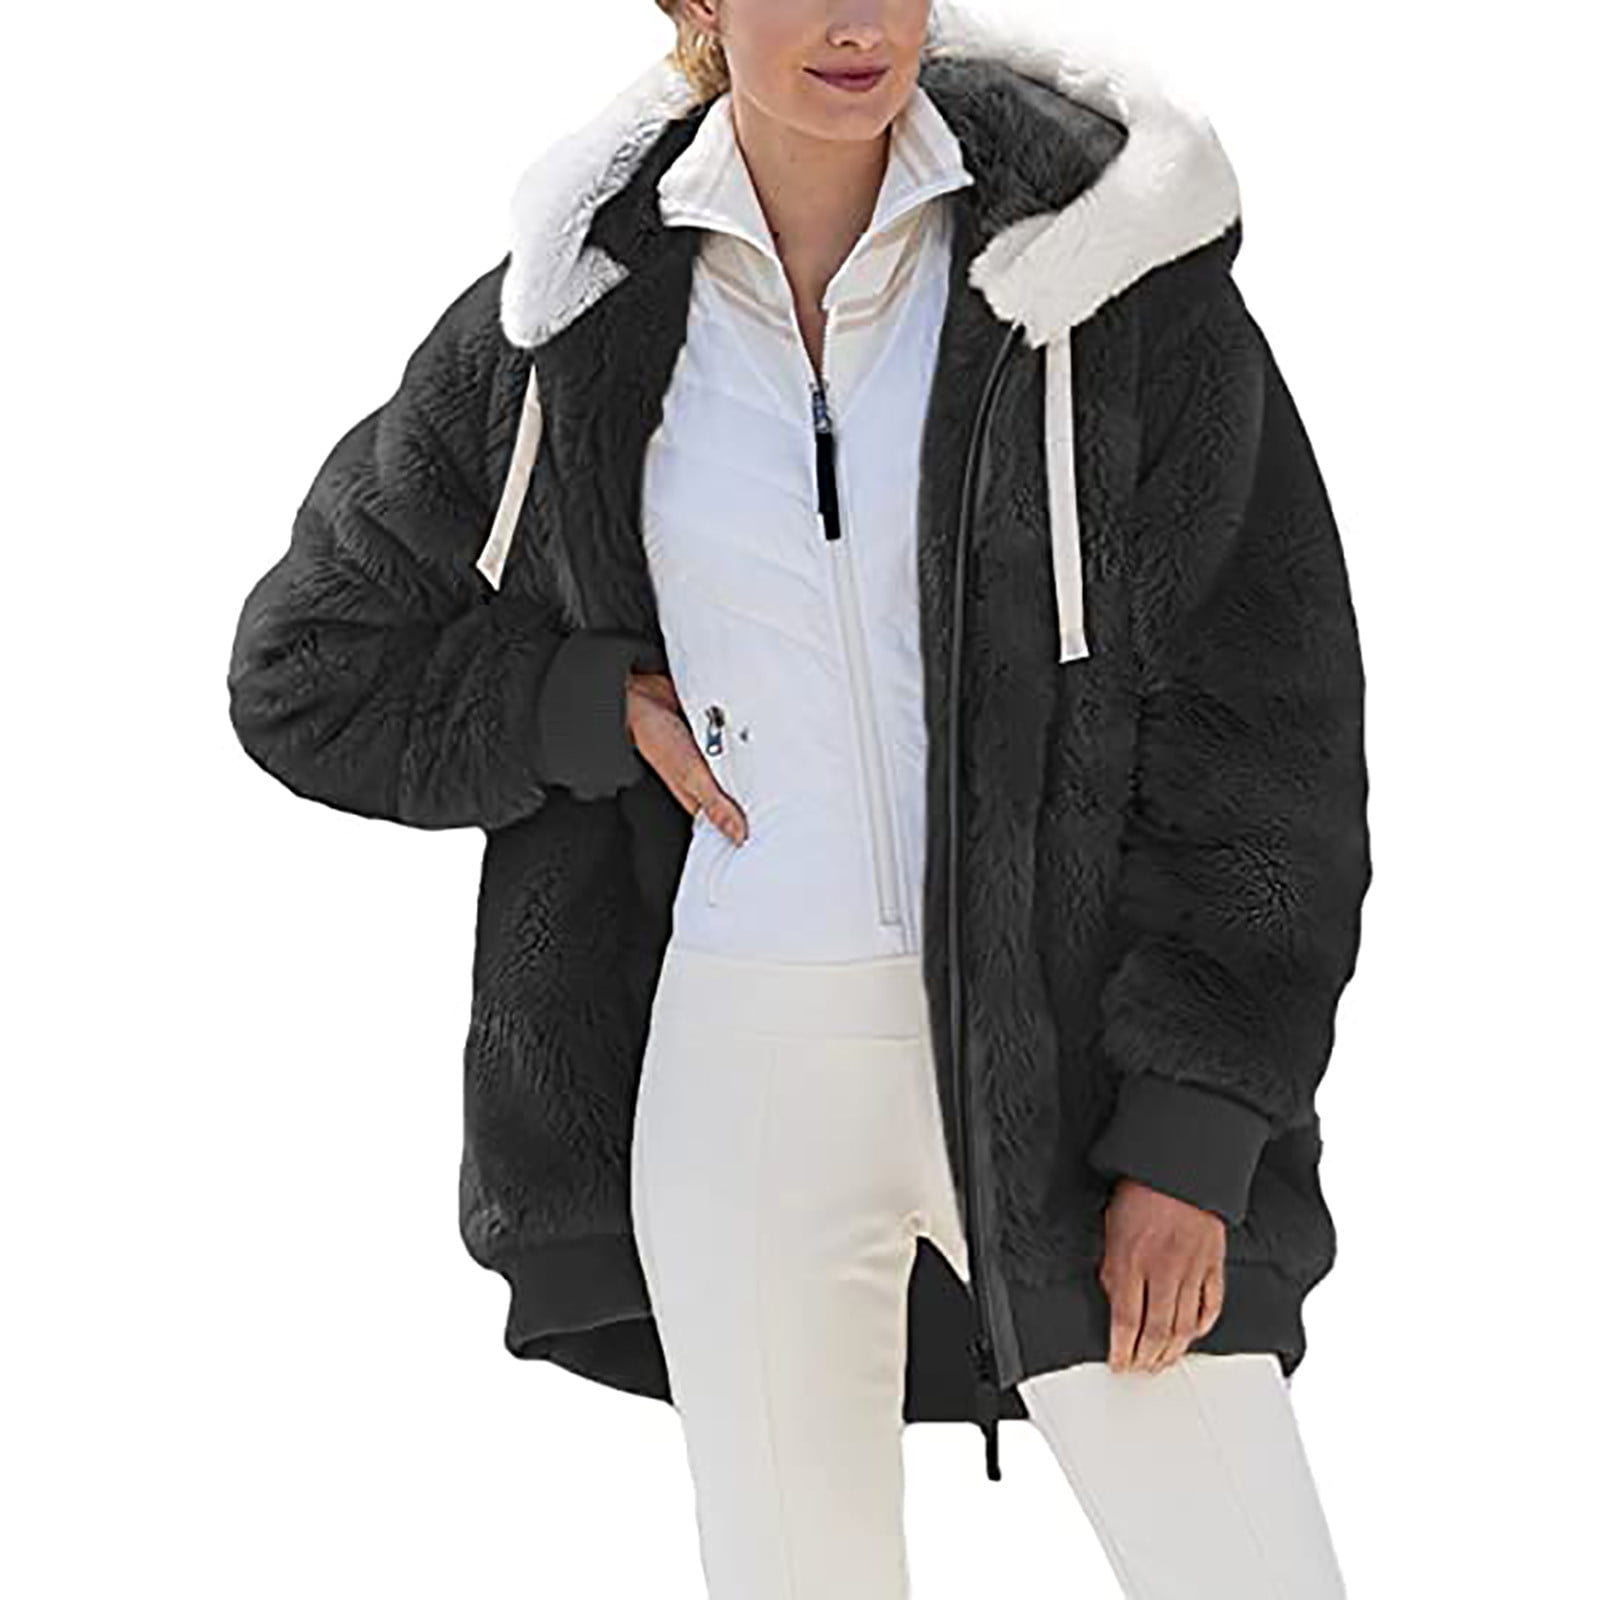 yoeyez Long Winter Coats for Women Down Jacket Cold Weather Outwear ...